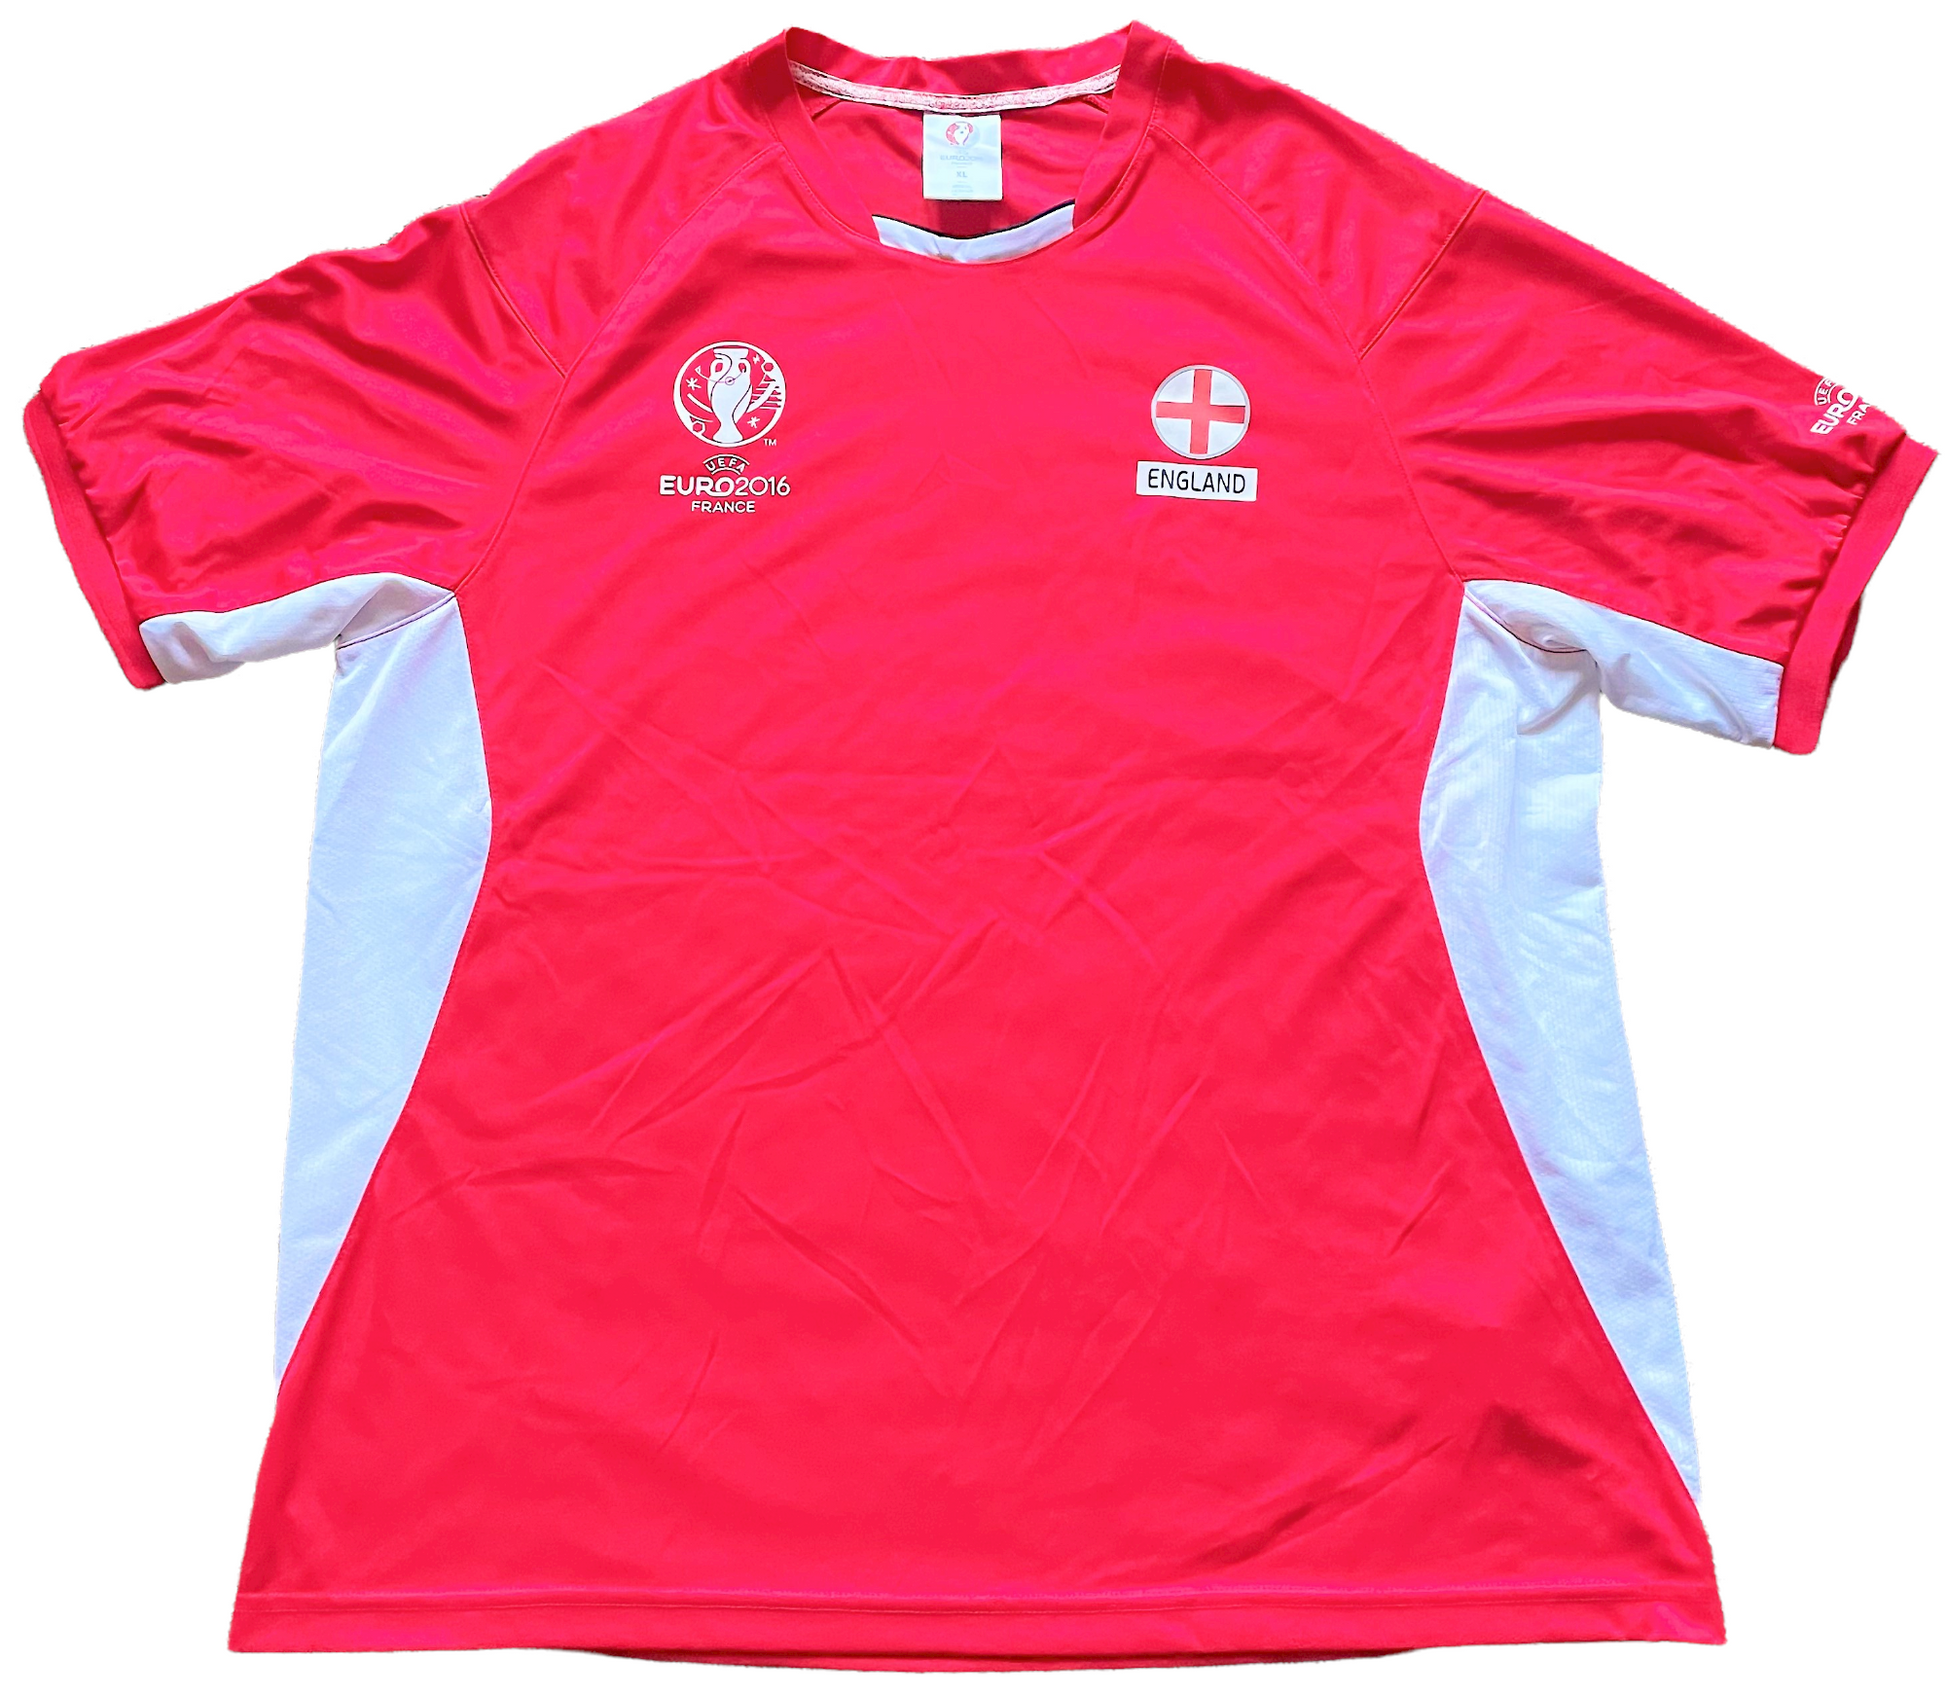 Euro 2016 England Fan Shirt (excellent) Adults XL